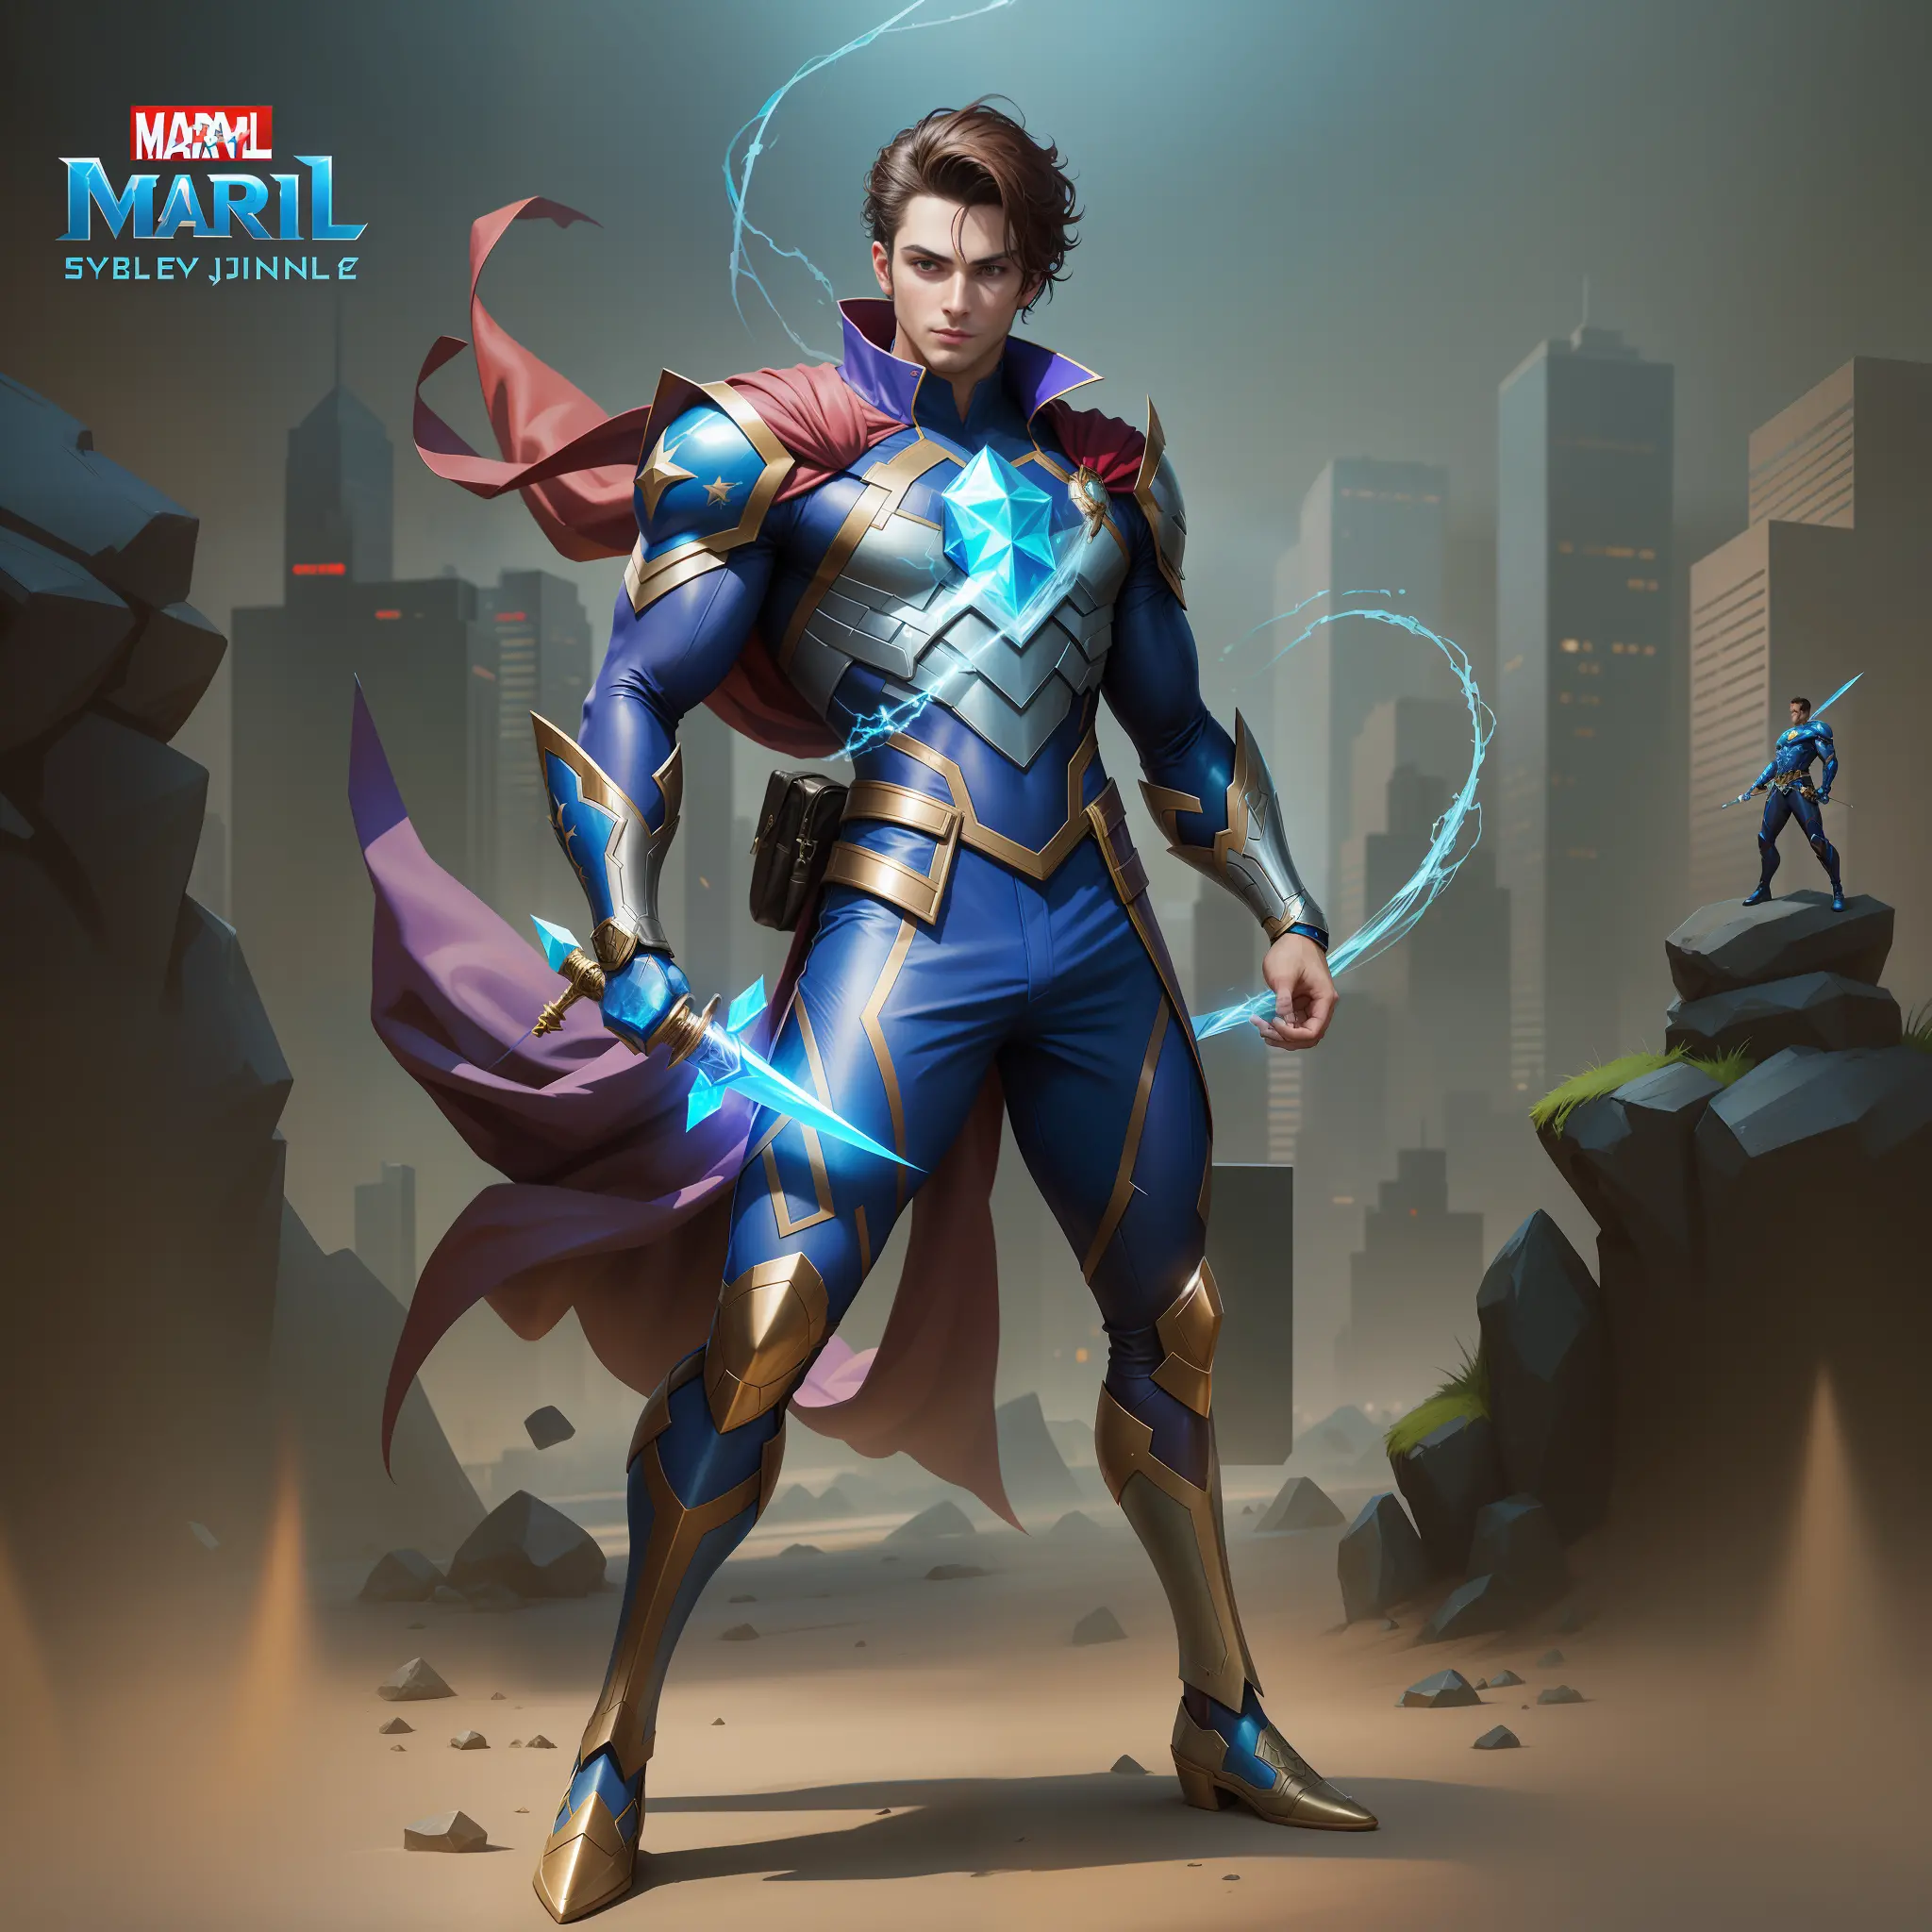 90+ Superhero In Battle Pose Stock Illustrations, Royalty-Free Vector  Graphics & Clip Art - iStock